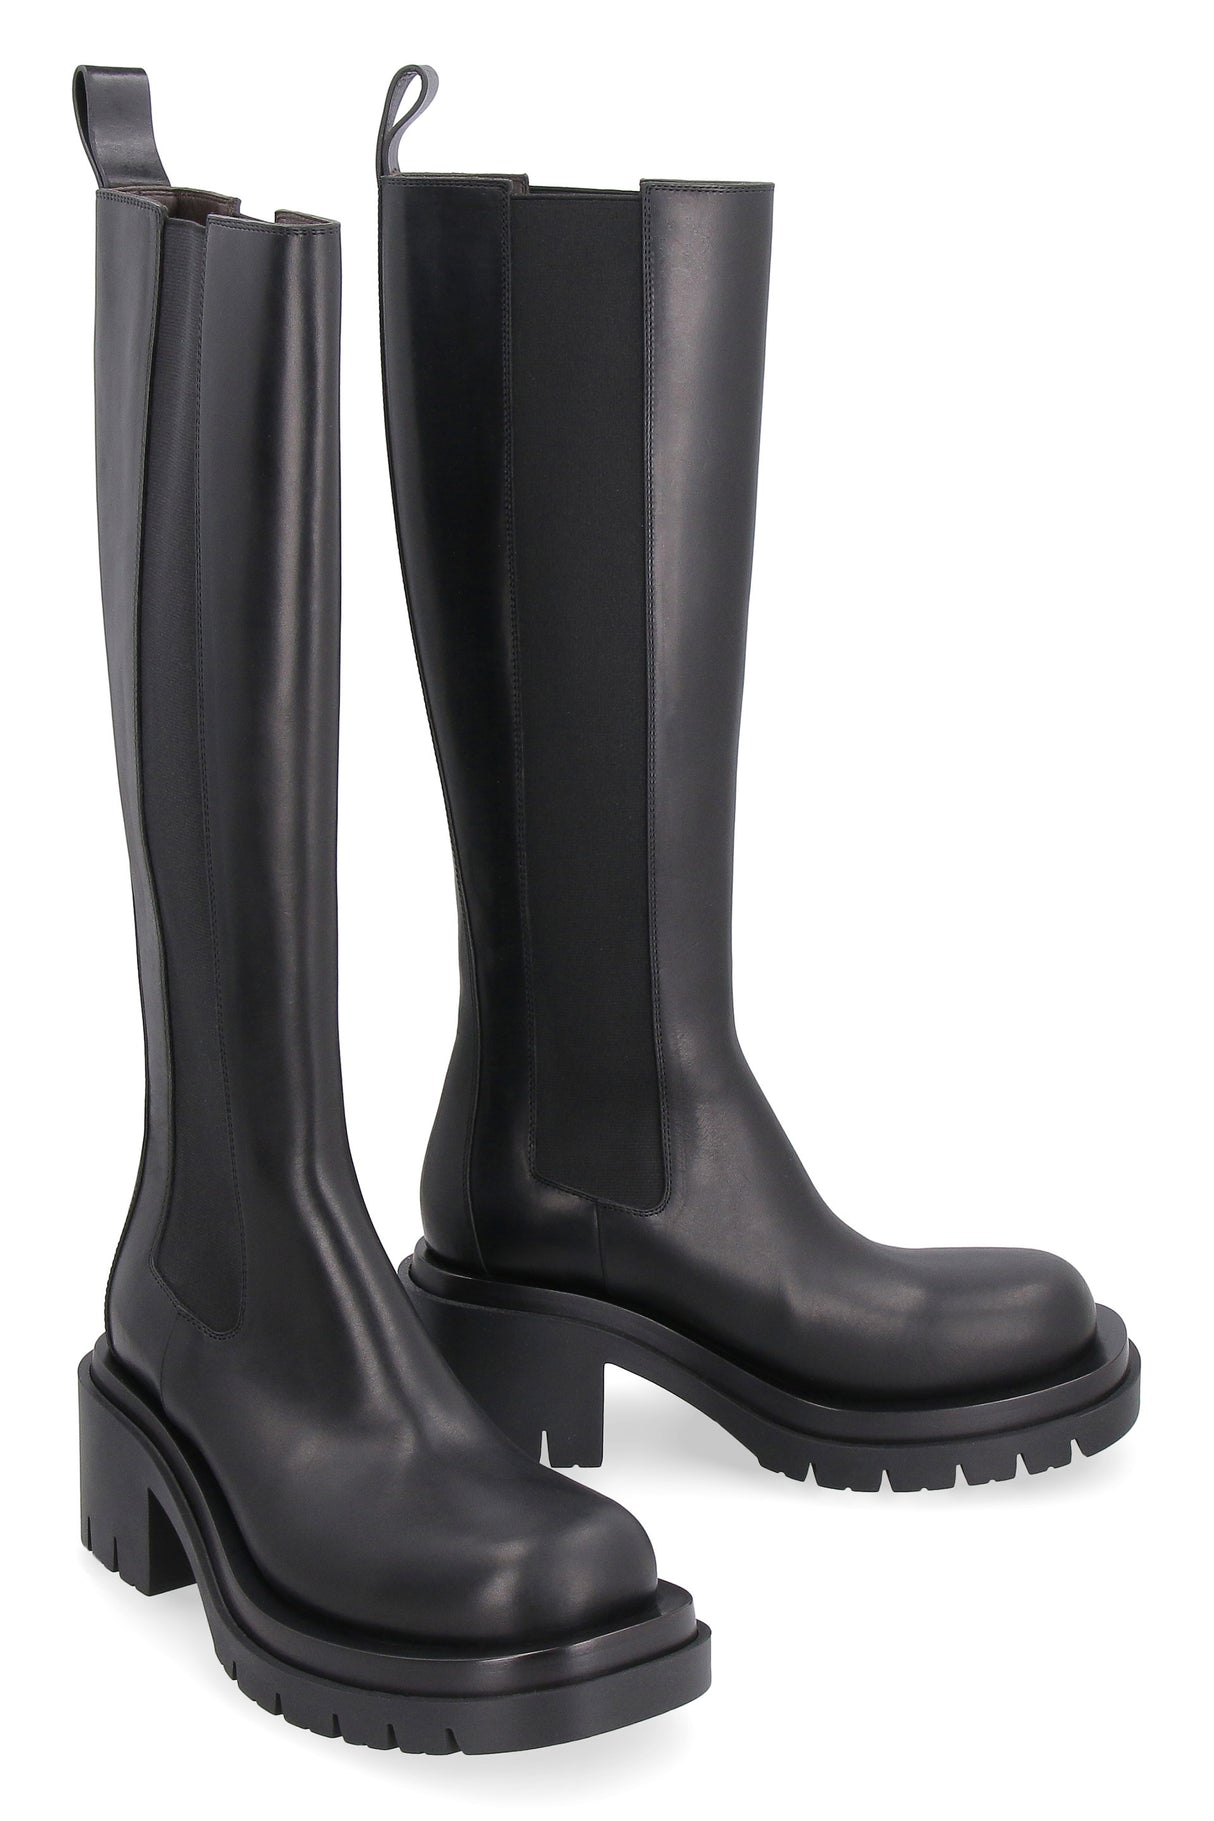 BOTTEGA VENETA Sleek Black Leather Boots for Women - FW22 Collection